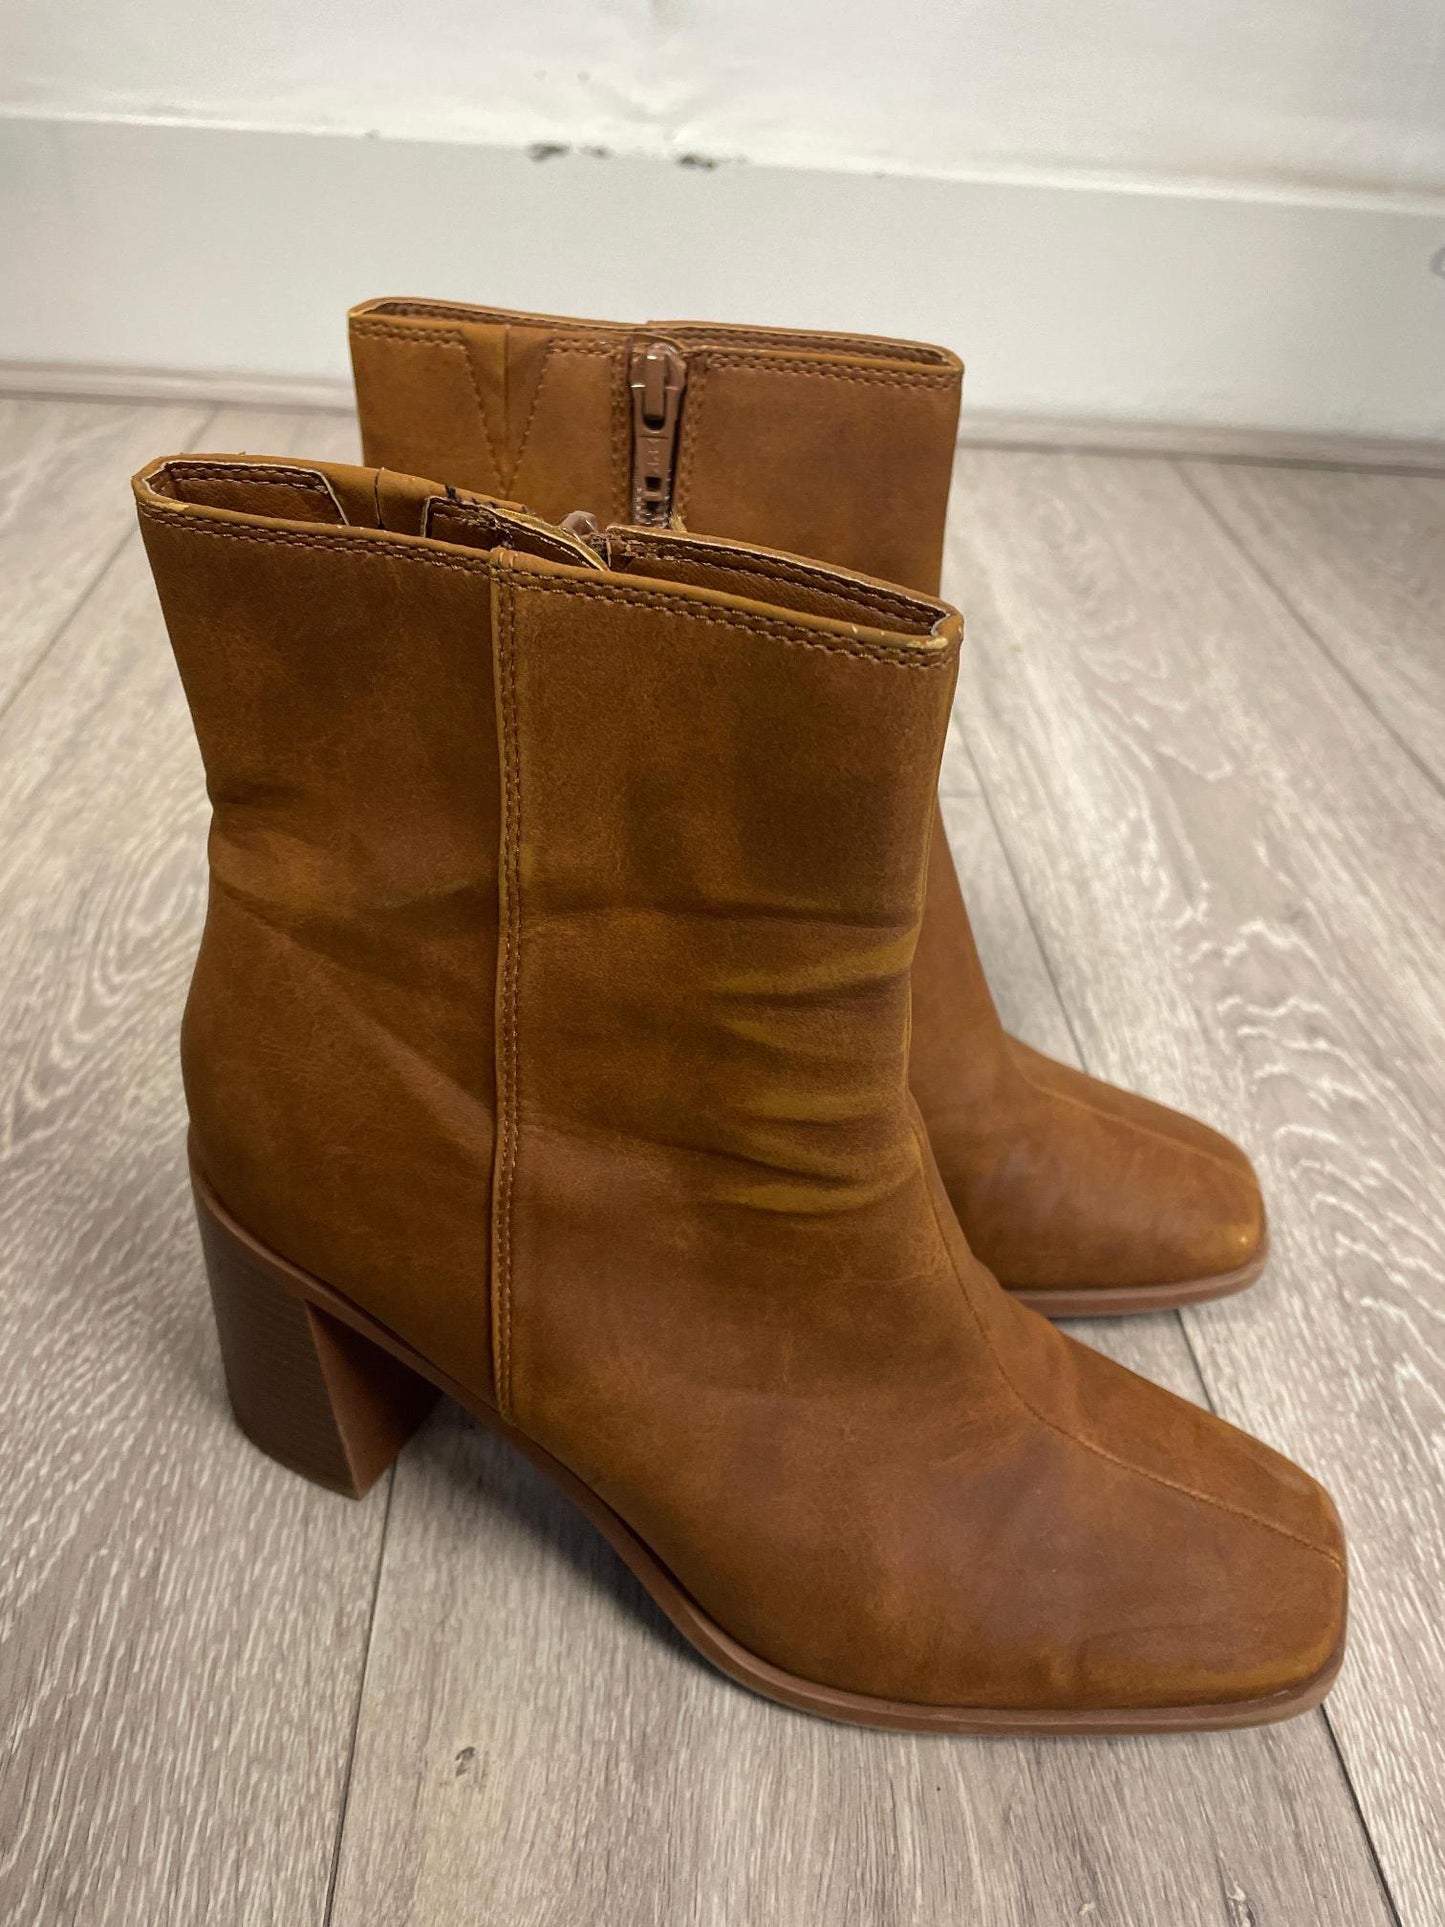 Light brown faux suede boots, M&S, Size 5.5 - Damaged Item Sale